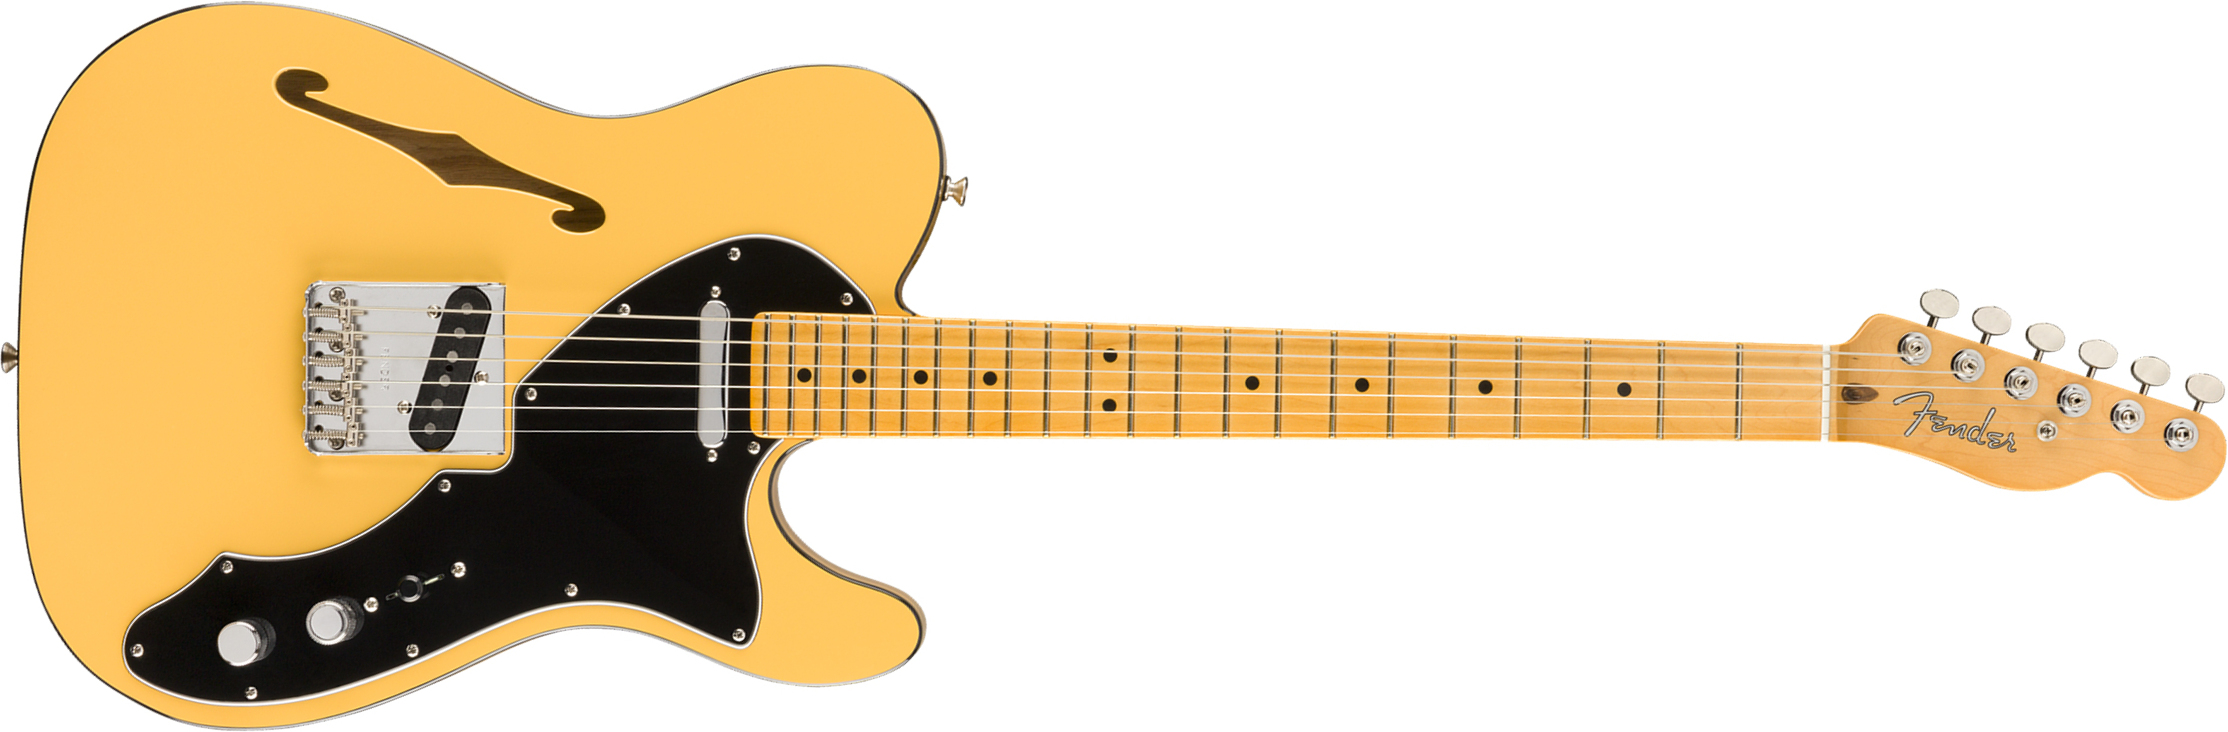 Fender Britt Daniel Tele Thinline Signature Ss Mn - Amarillo Gold - Semi-hollow electric guitar - Main picture